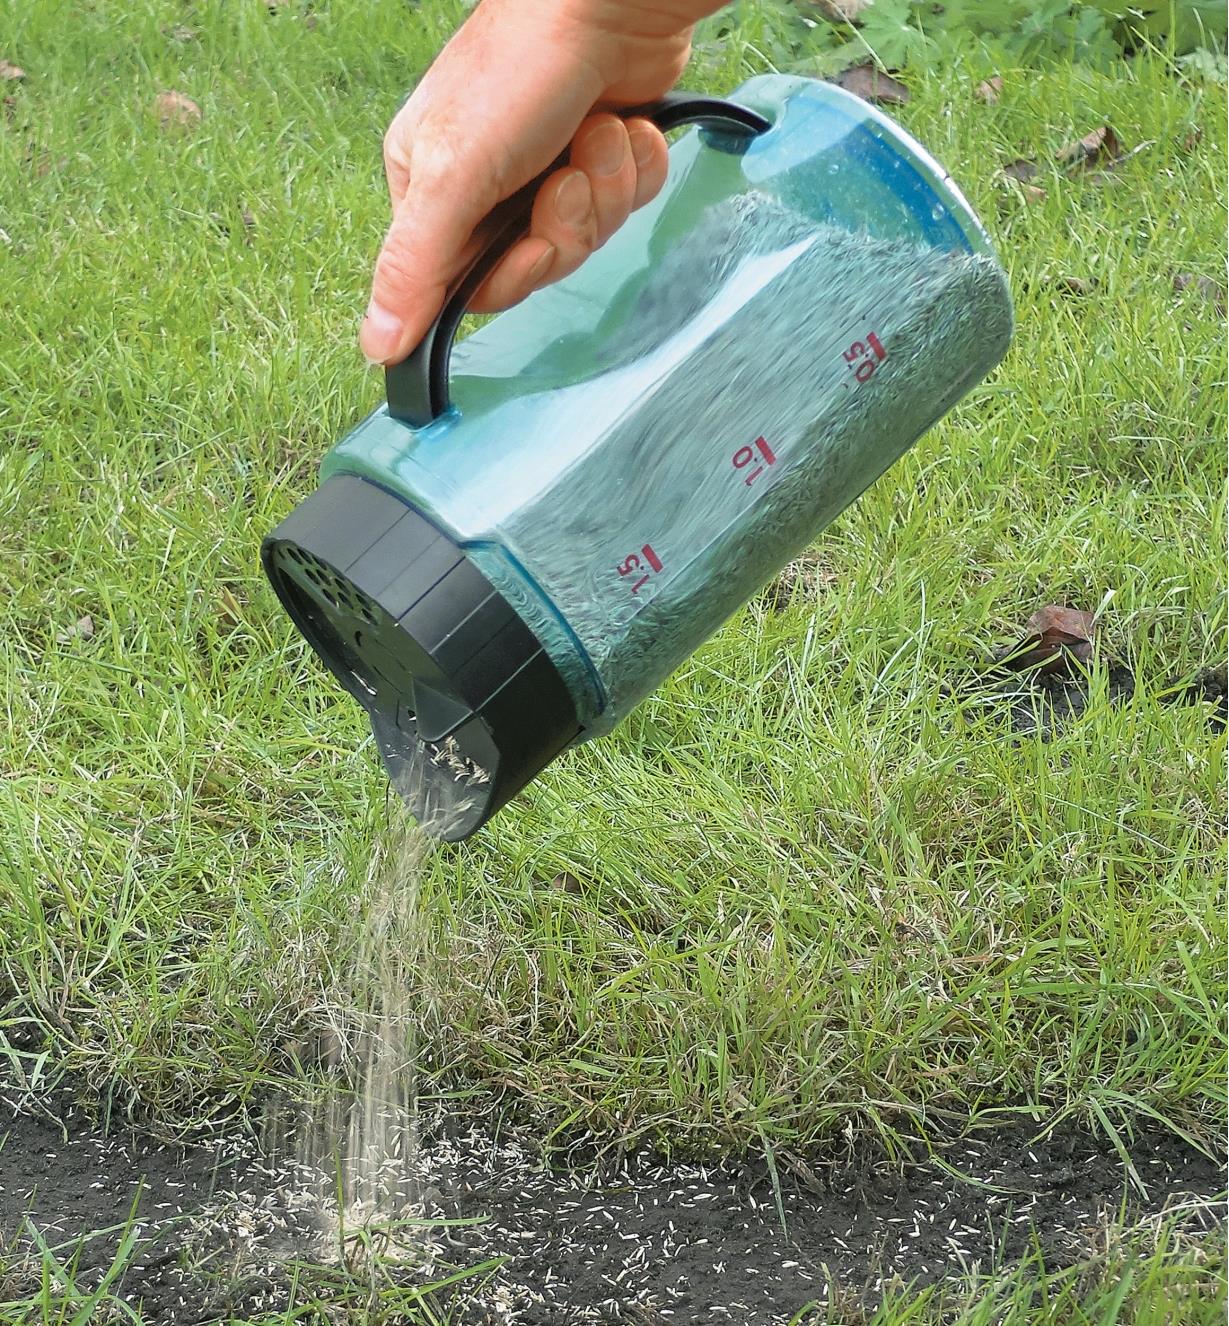 Dispensing fertilizer from the Hand-Held Shaker